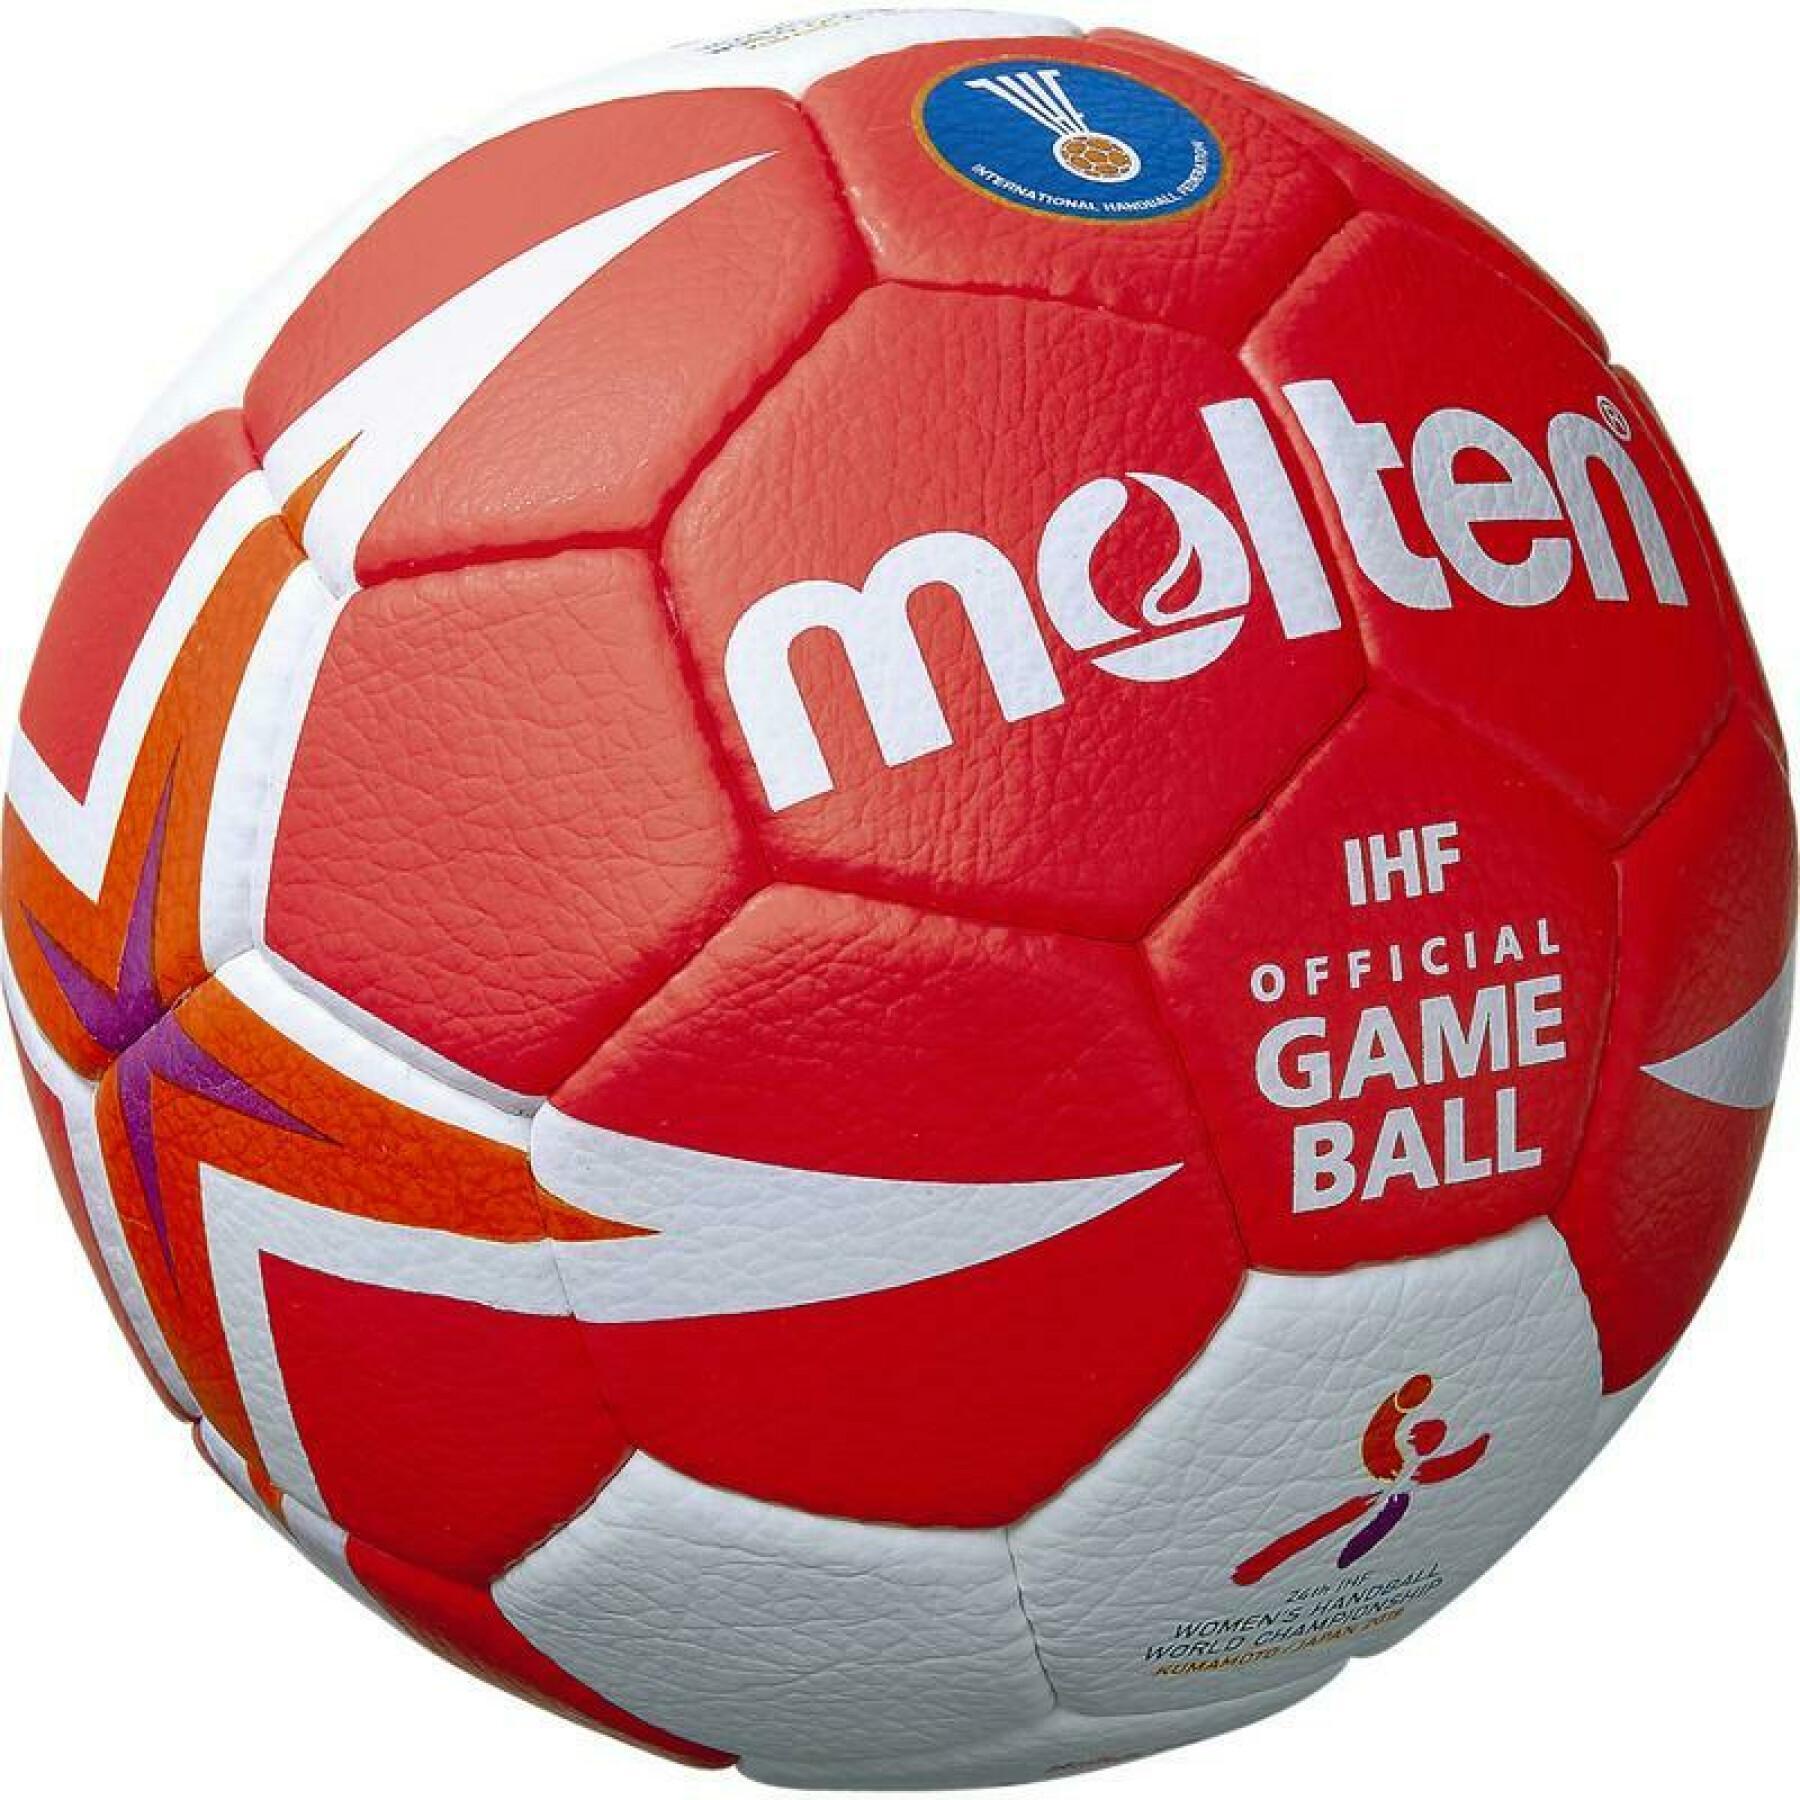 Balão Molten Officiel IHF Championnat du monde féminin 2019